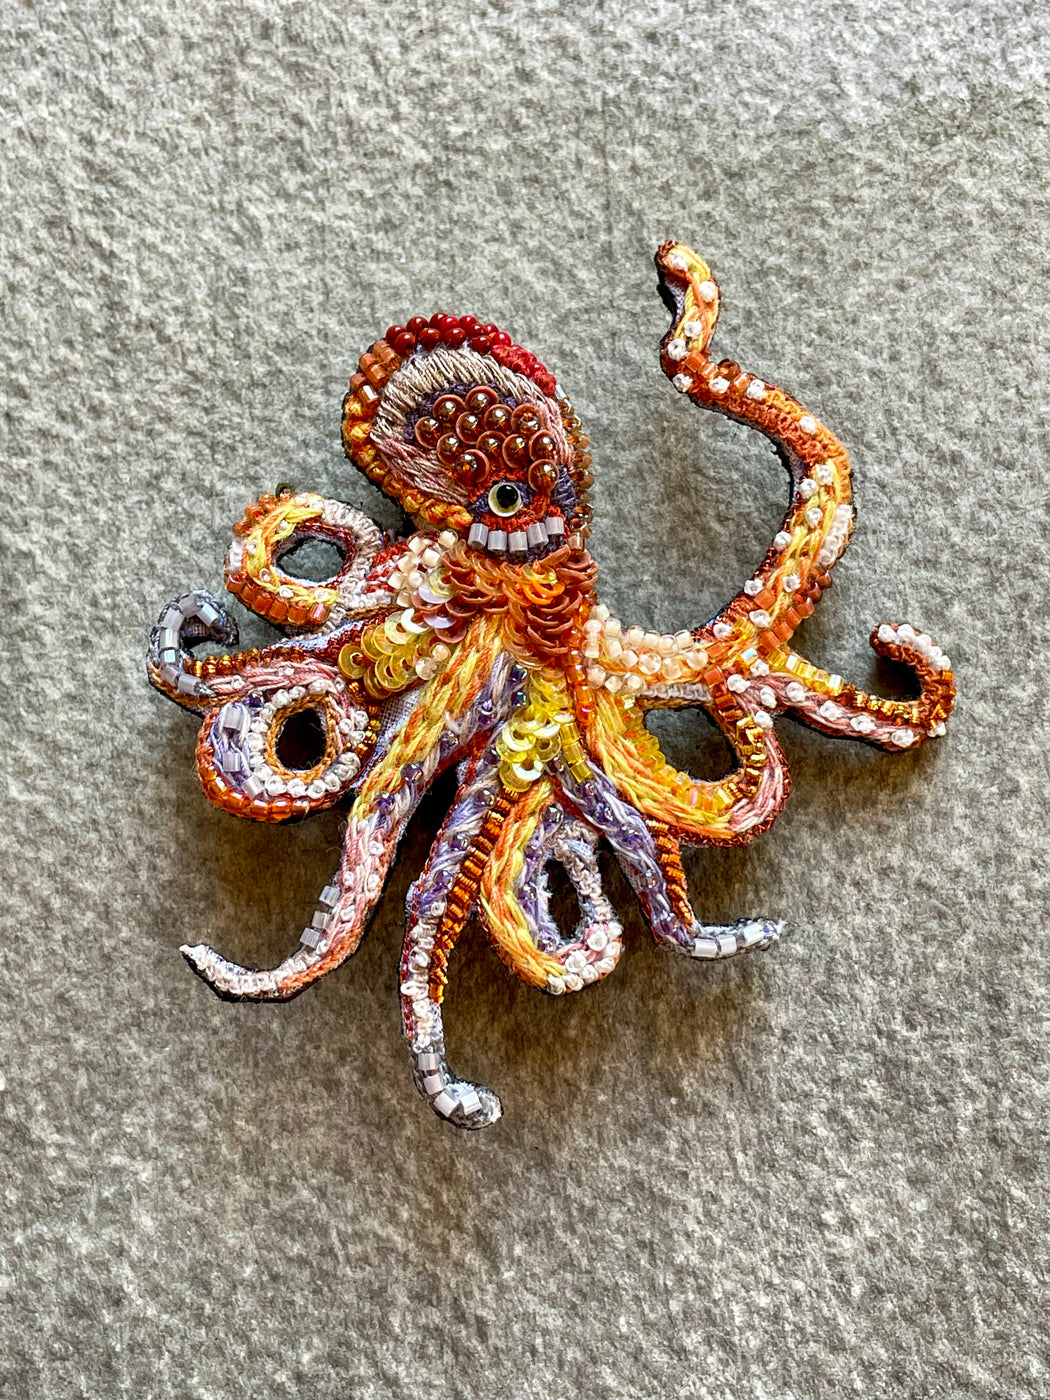 "Octopus" Brooch by Trovelore